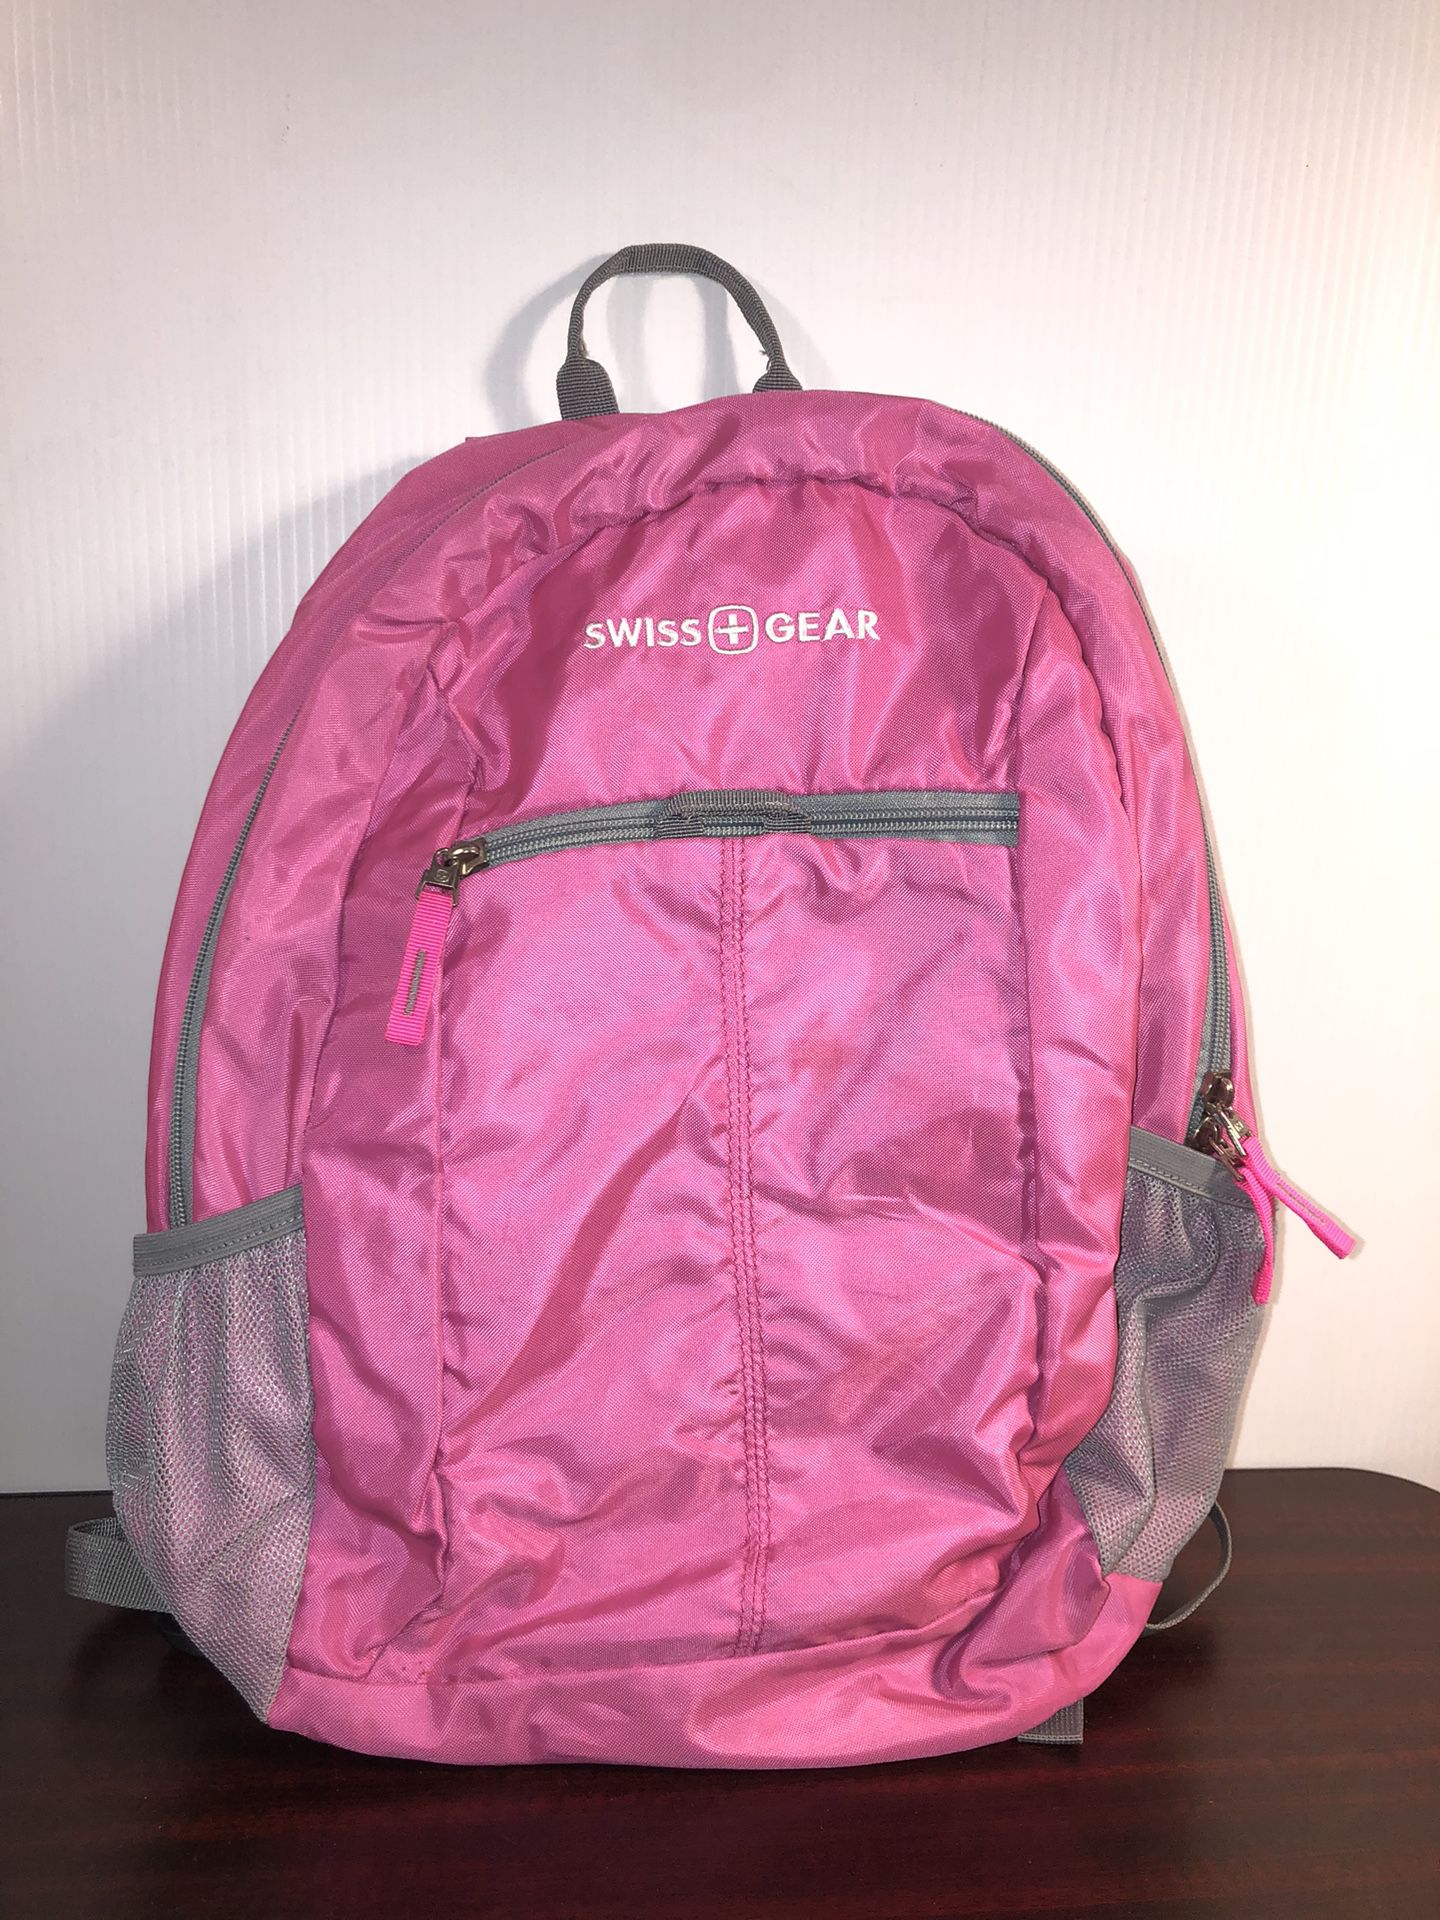 SwissGear Student Backpack 15" Laptop Durable/Light Weight Pink